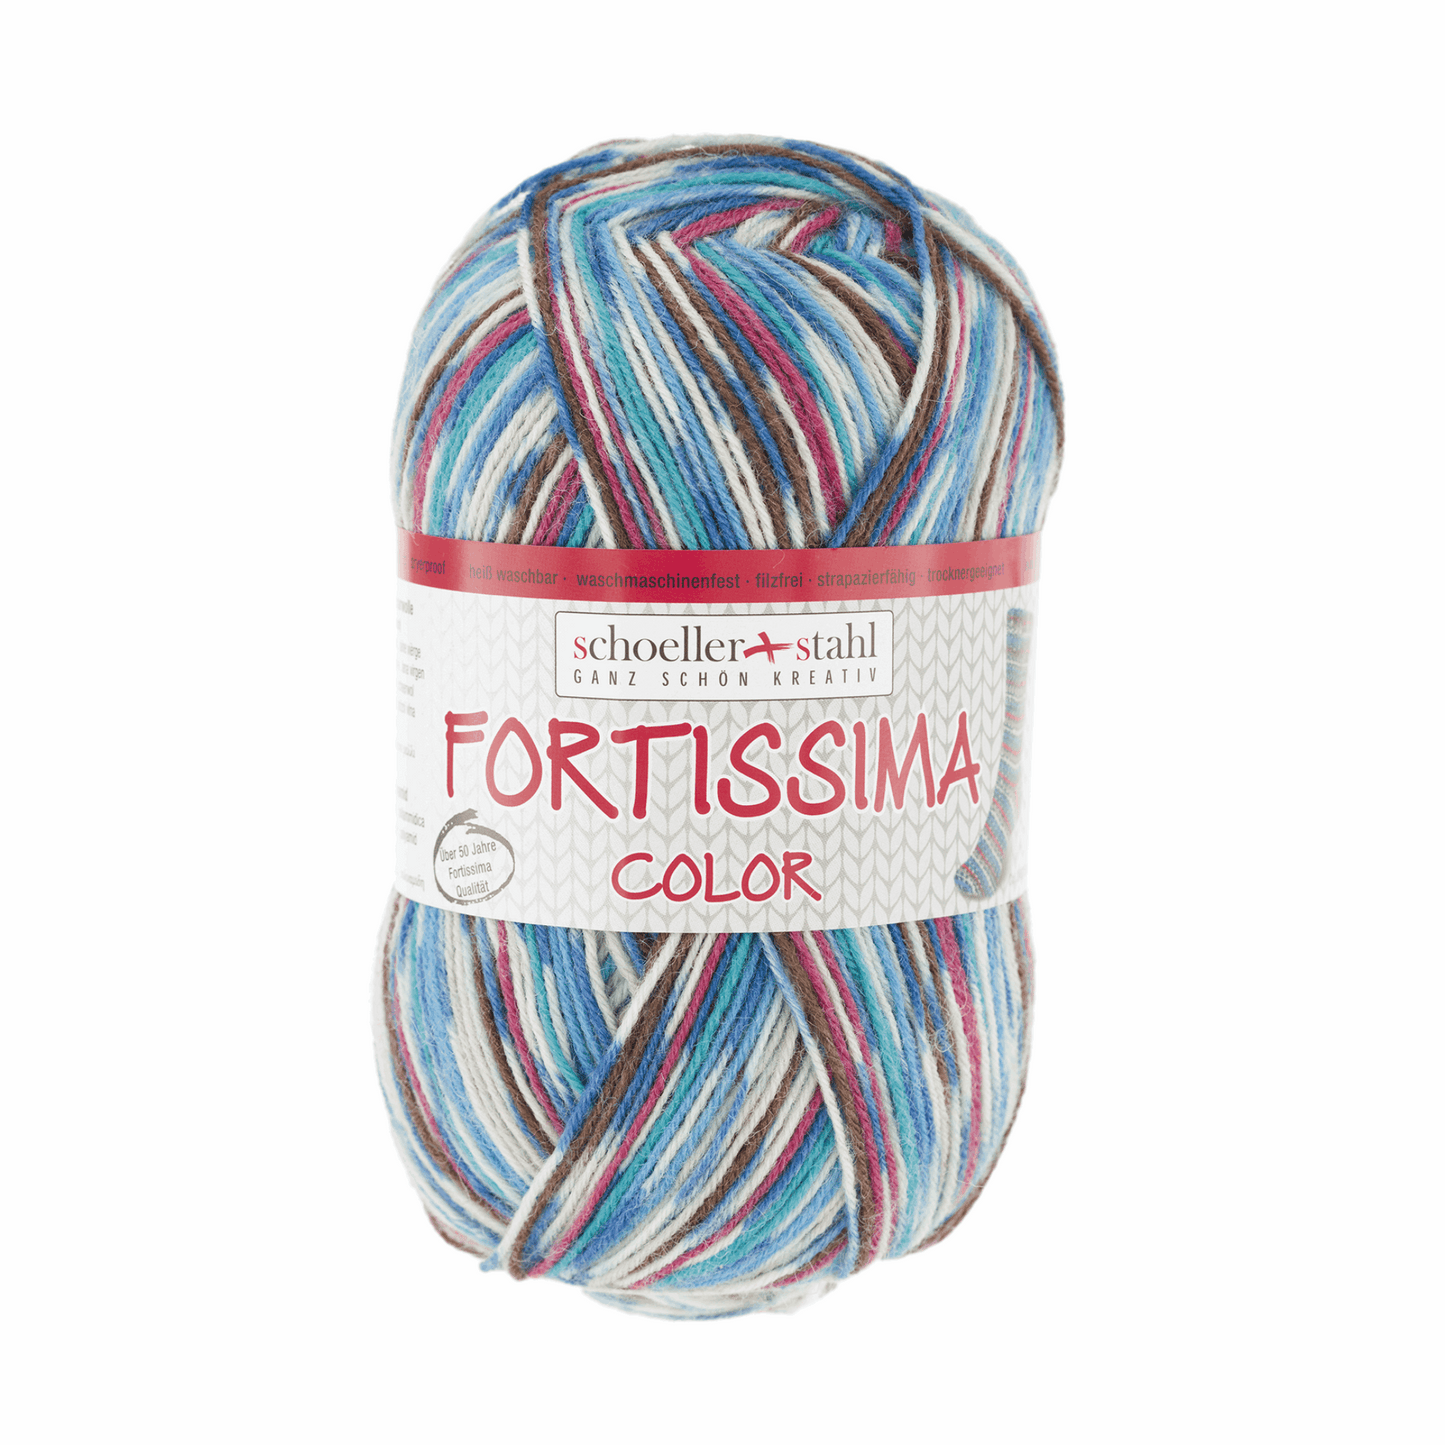 Fortissima socka 4-ply, 90028, color 2492, club